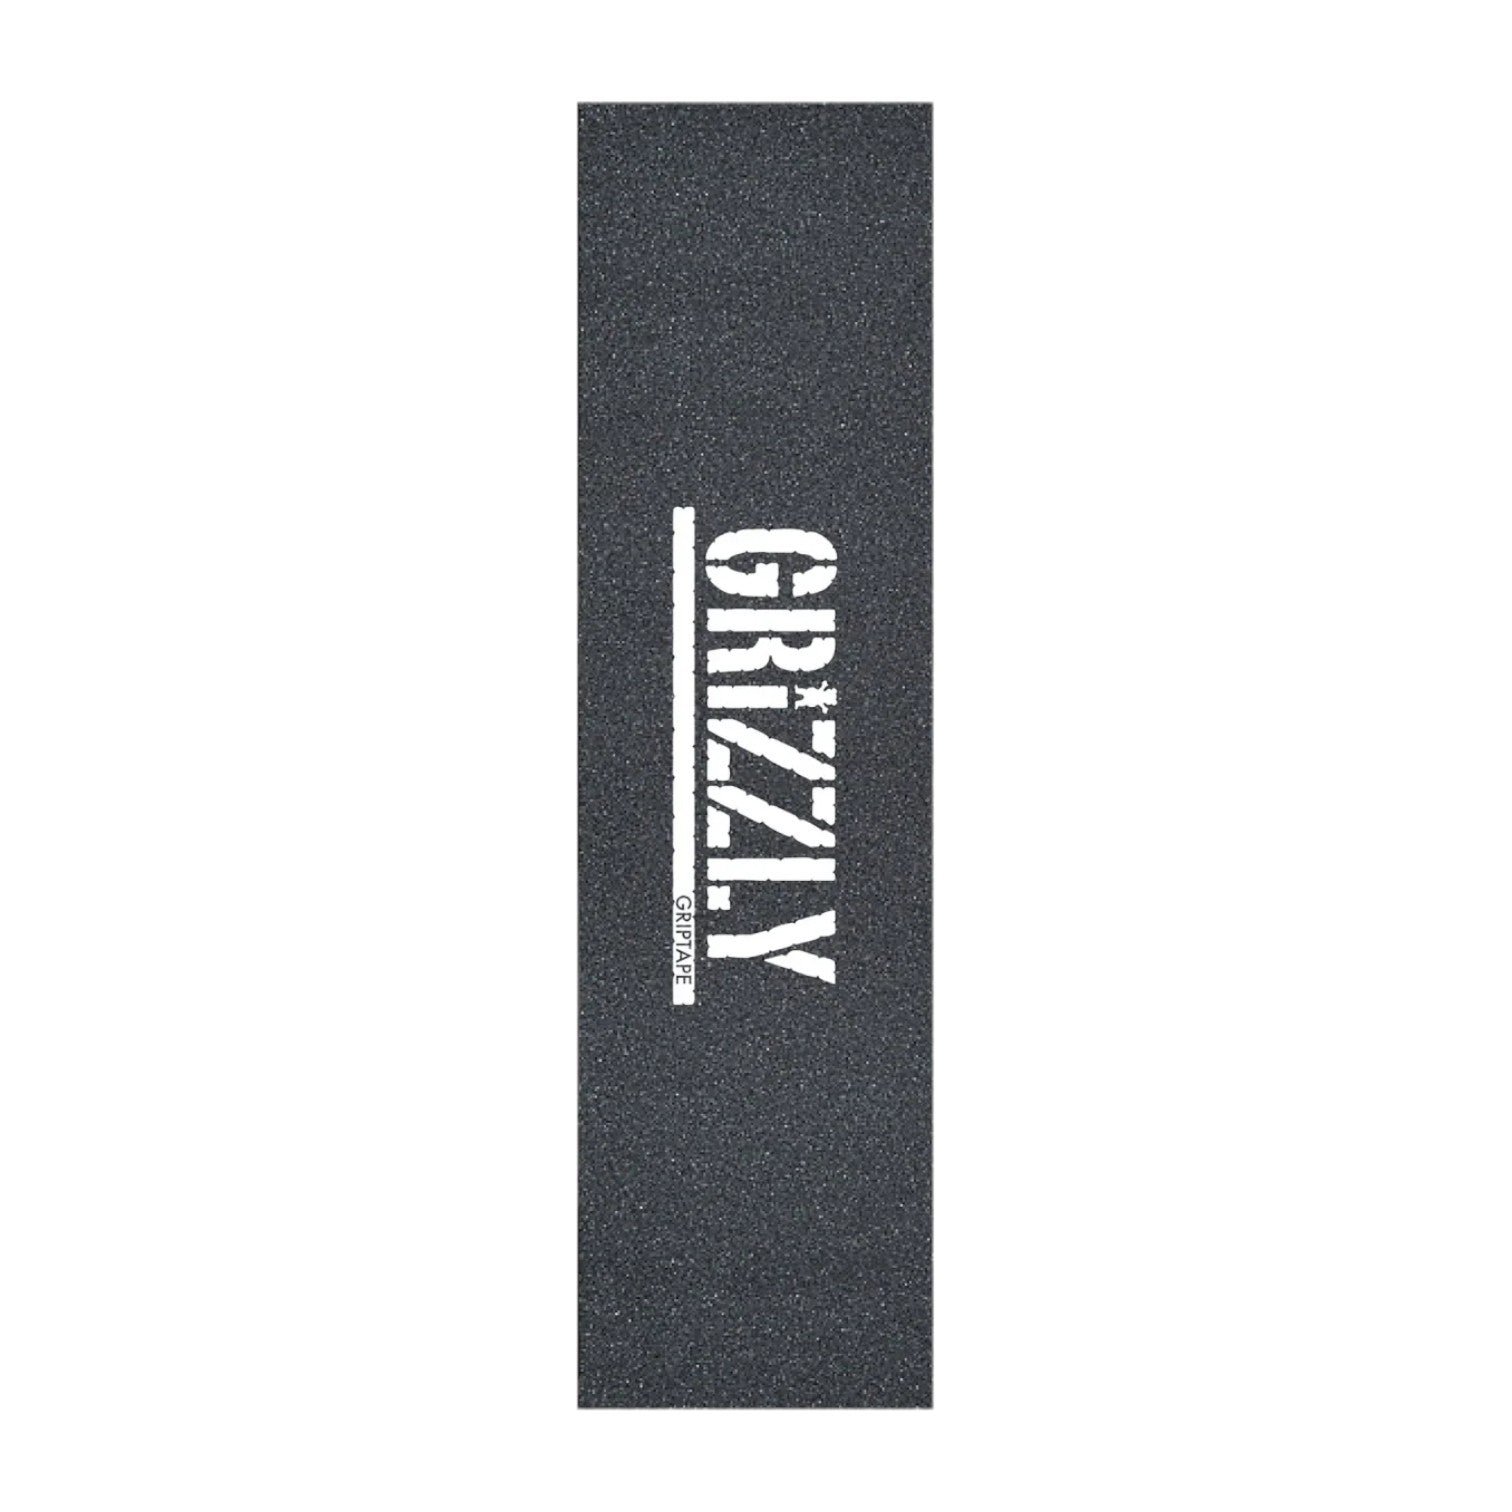 Grizzly Stamp Print Griptape - Black/White